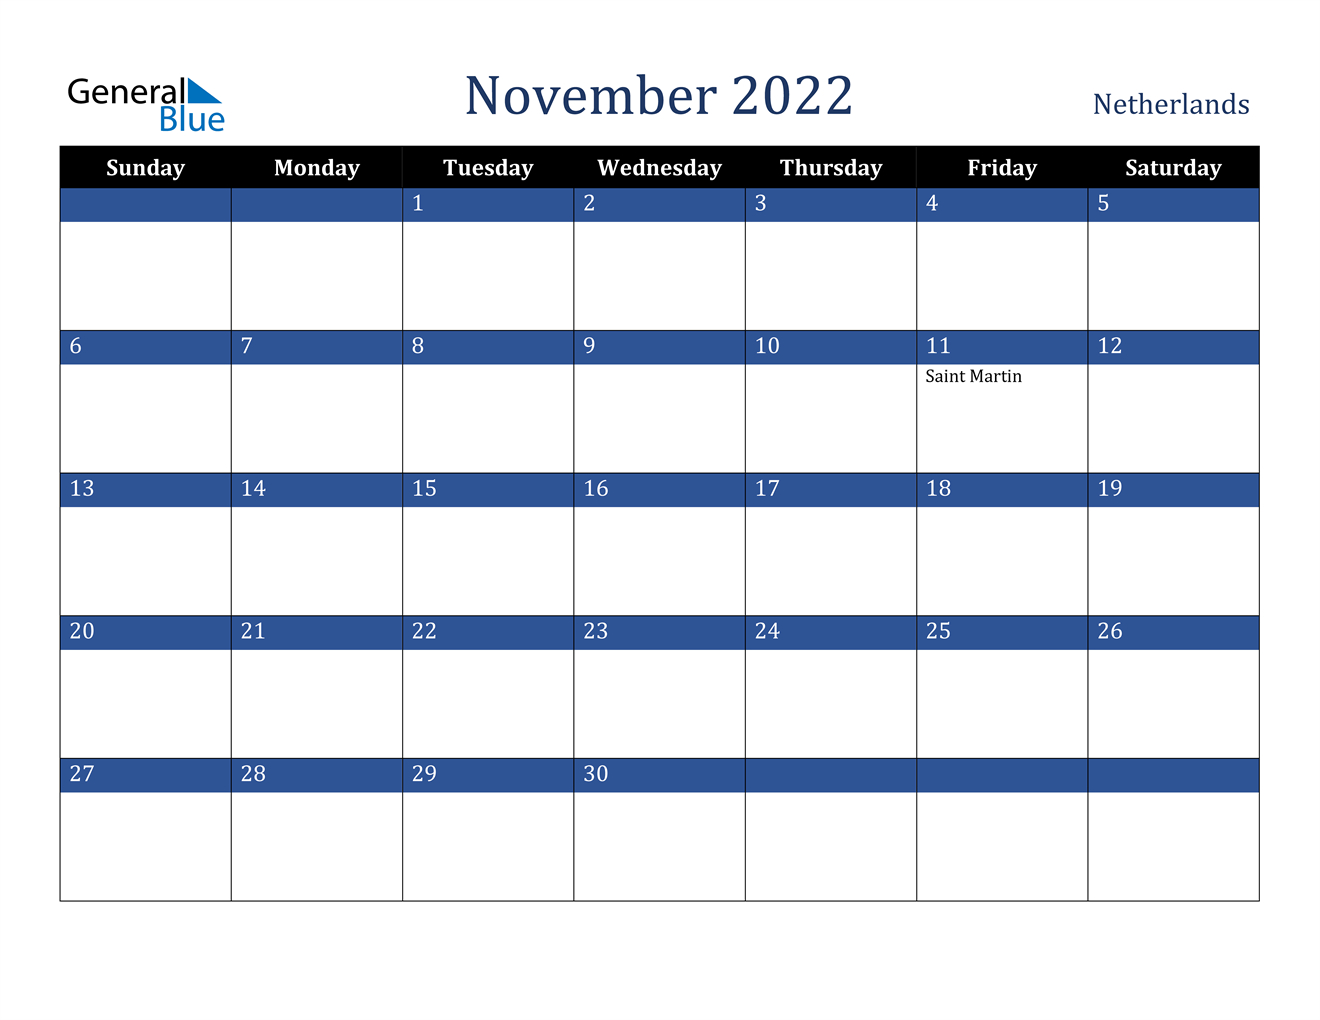 November 2022 Calendar - Netherlands